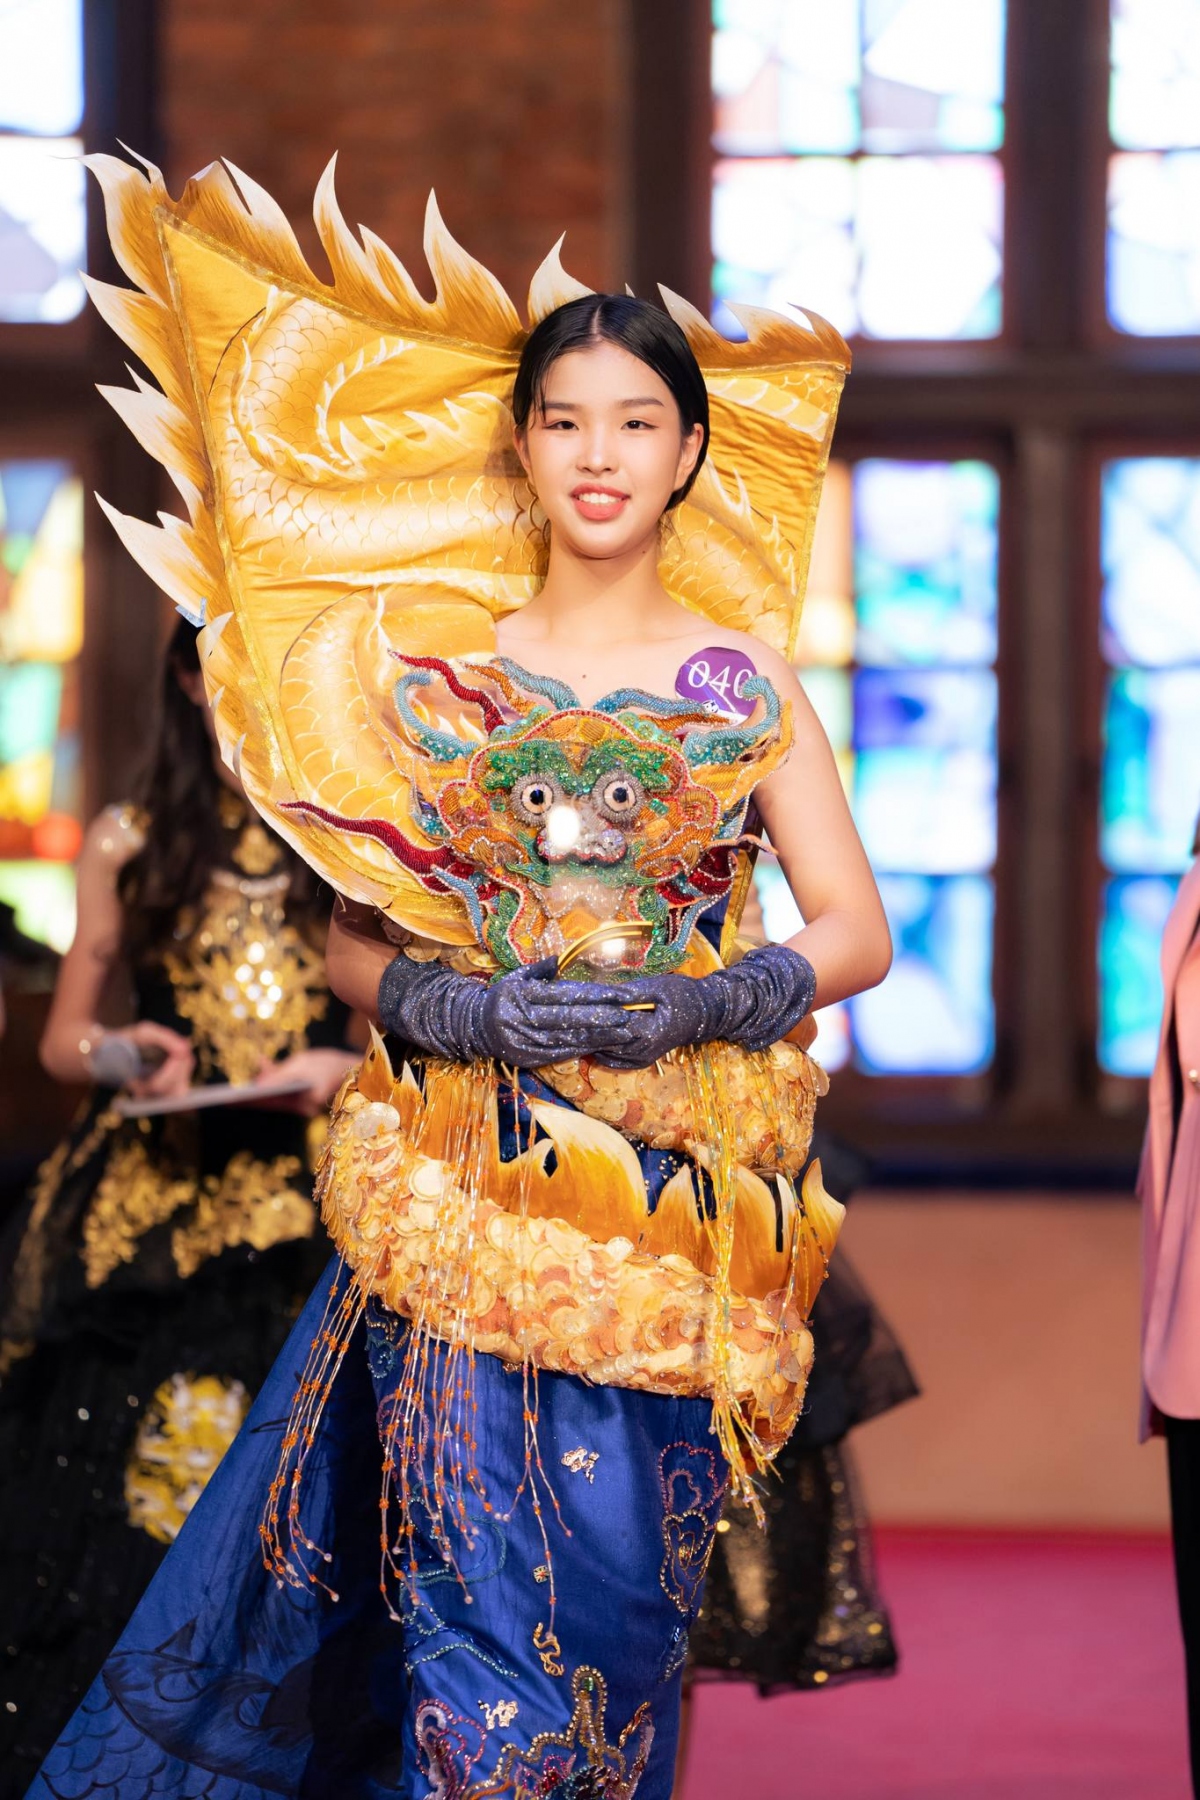 Local teenager wins high prize at Hong Kong Kids Fashion Week